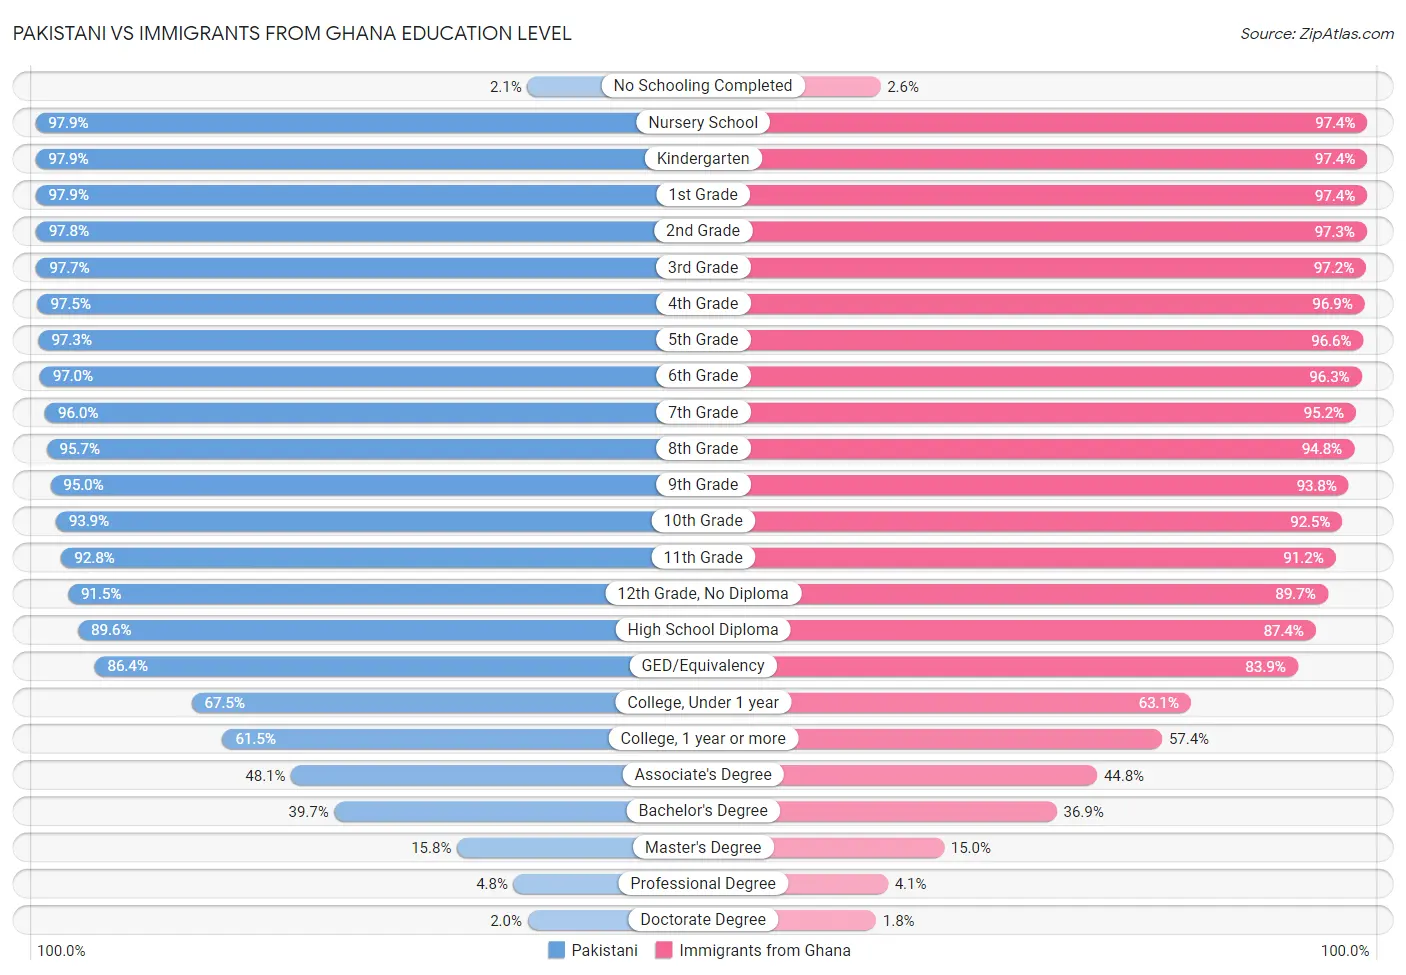 Pakistani vs Immigrants from Ghana Education Level